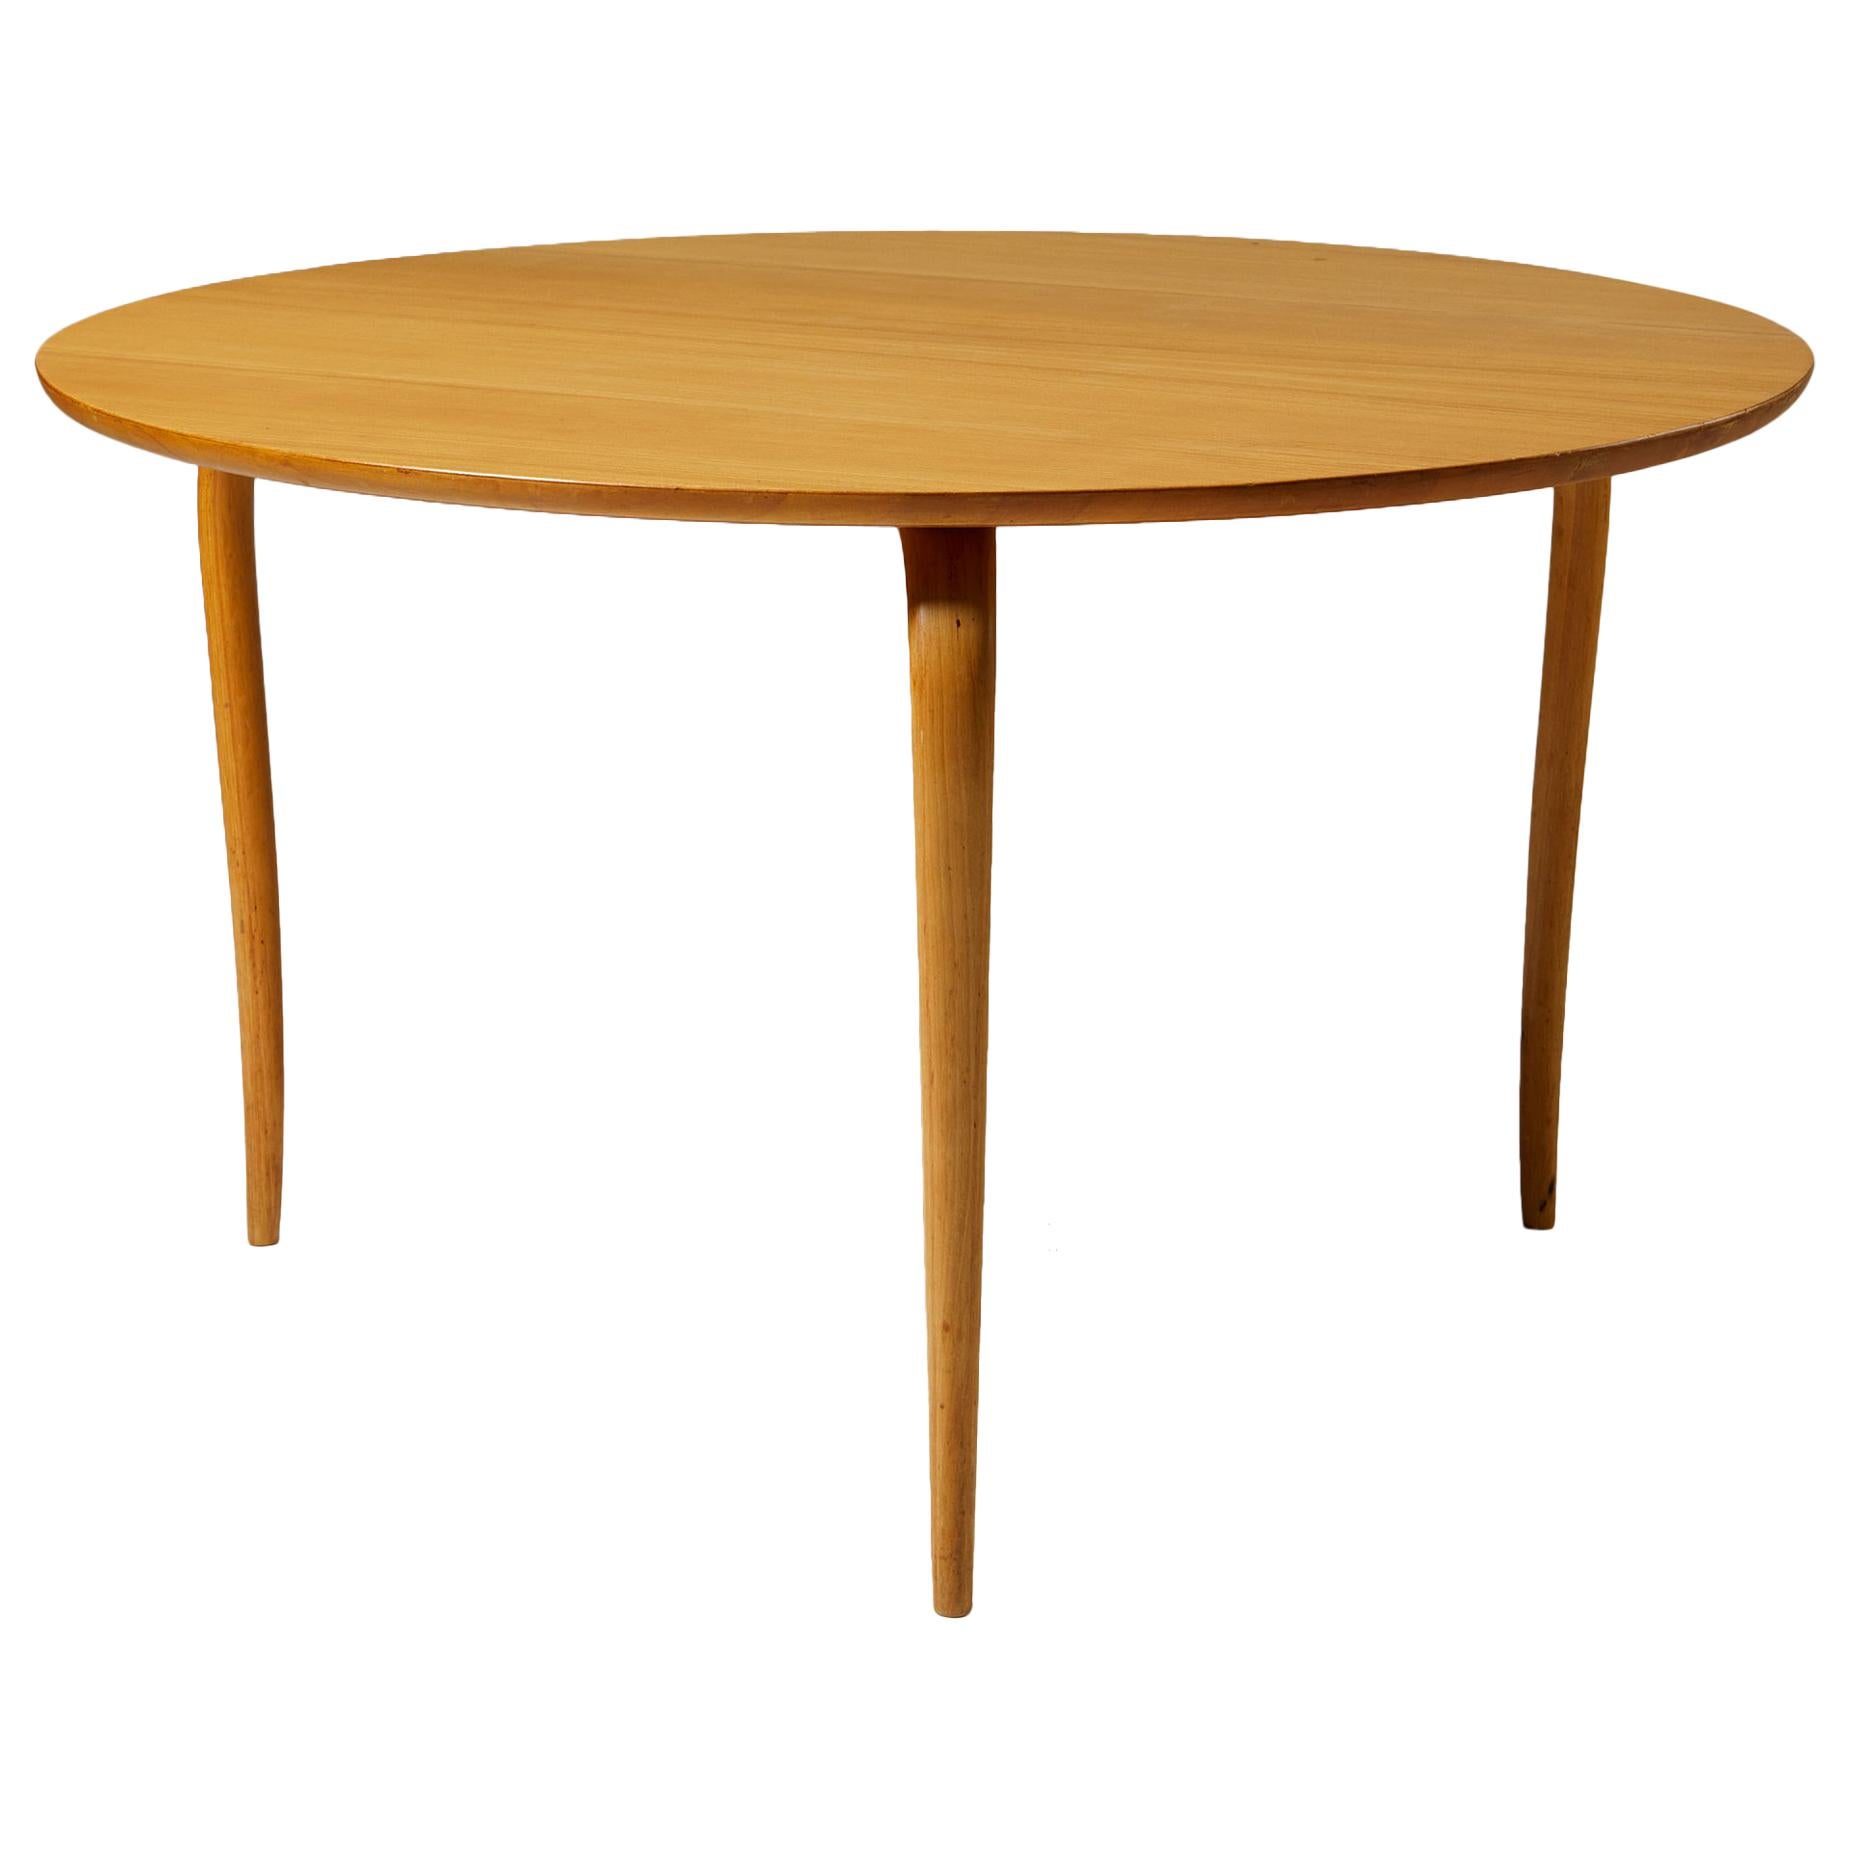 Table Annika Designed by Bruno Mathsson for Karl Mathsson, Sweden, 1936